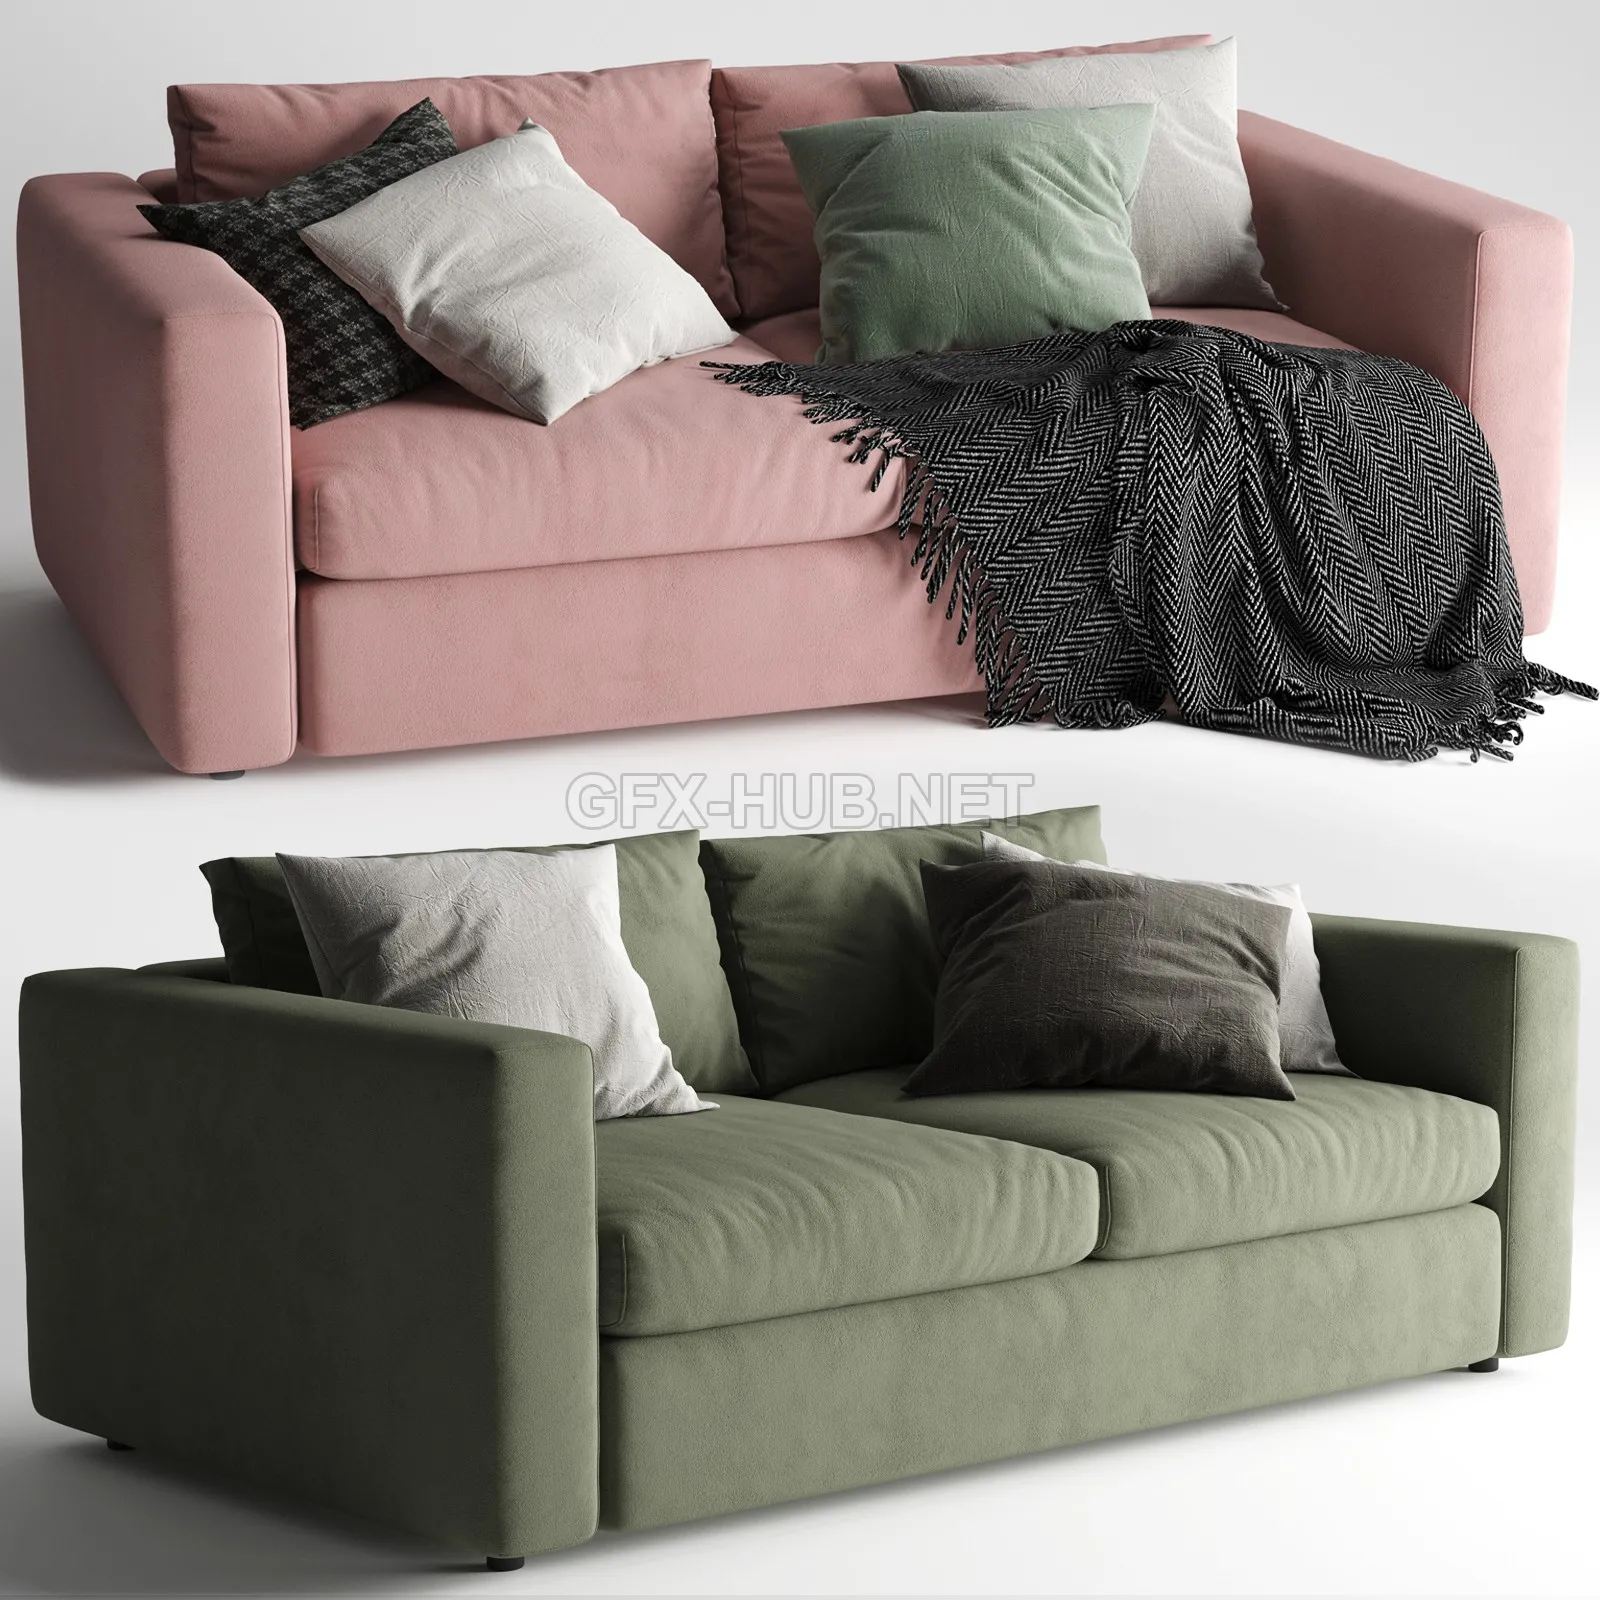 FURNITURE 3D MODELS – Ikea Vimle Sofa 2 Seats